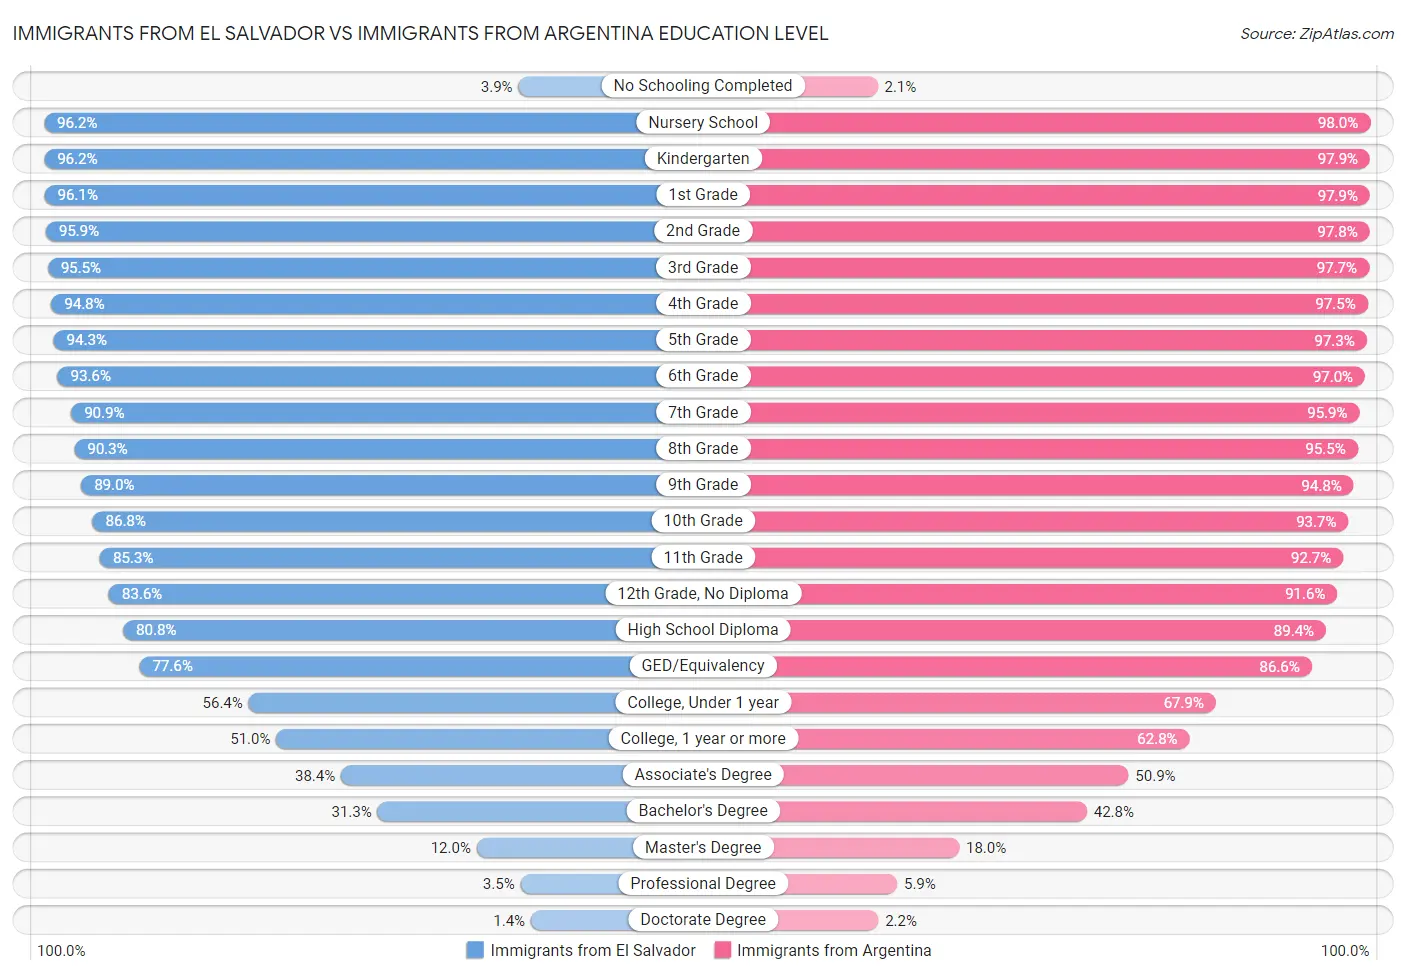 Immigrants from El Salvador vs Immigrants from Argentina Education Level